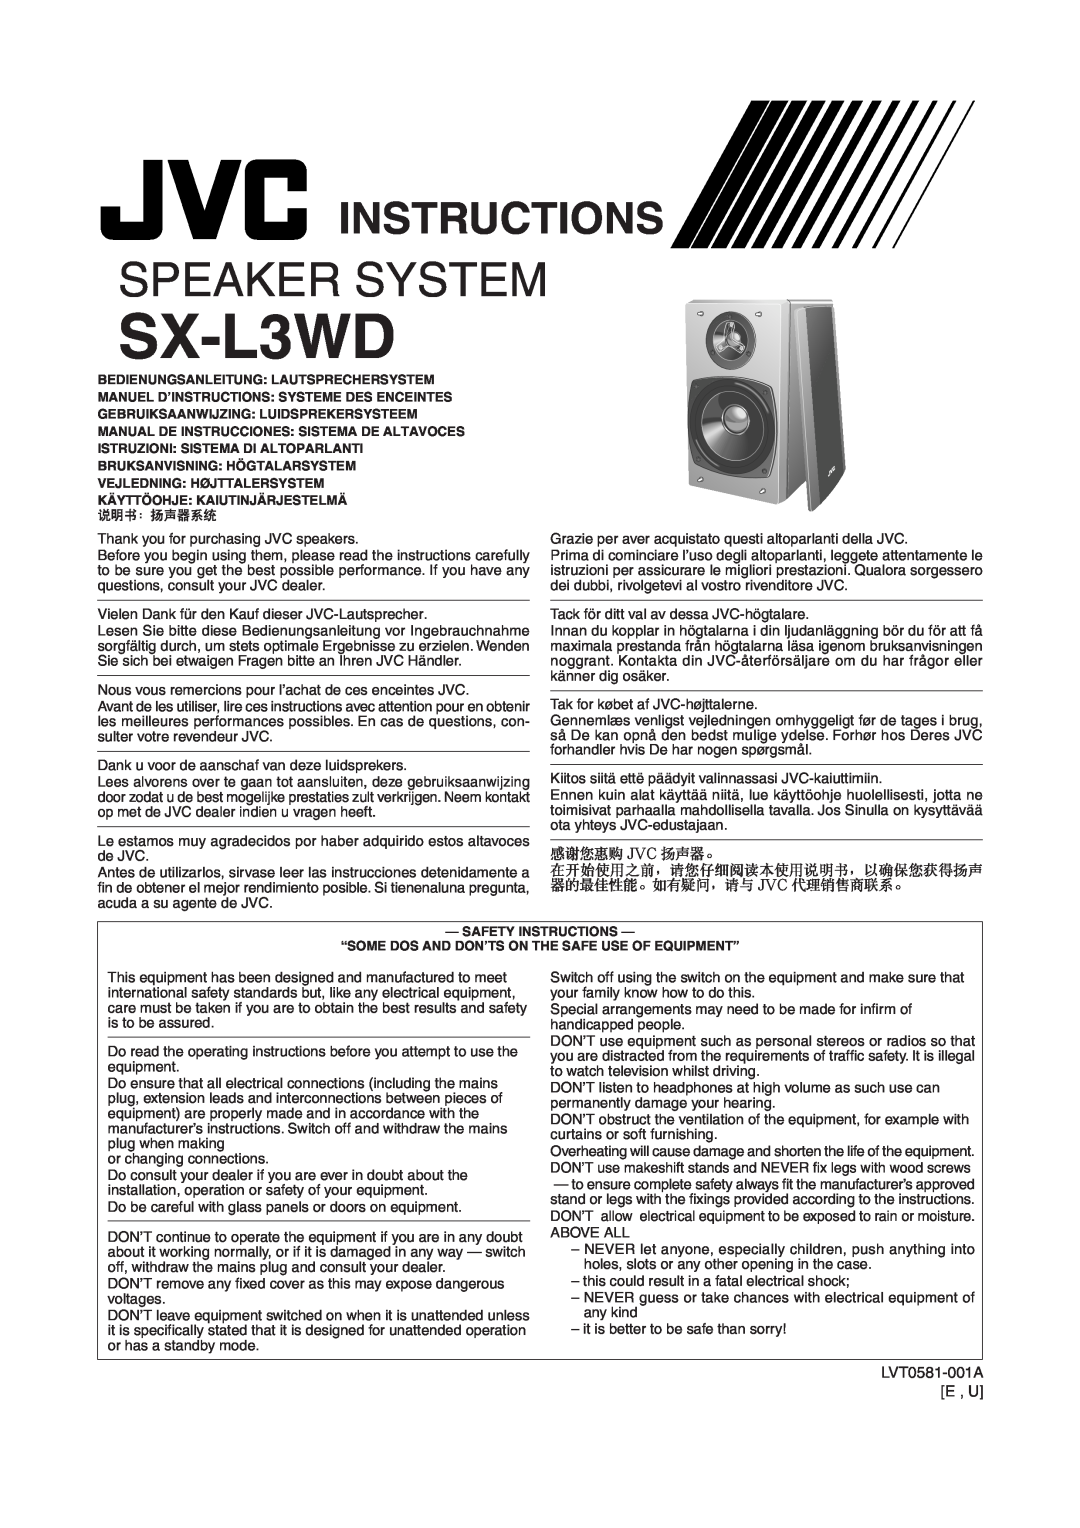 JVC SX-L3WD manual Speaker System, Instructions 